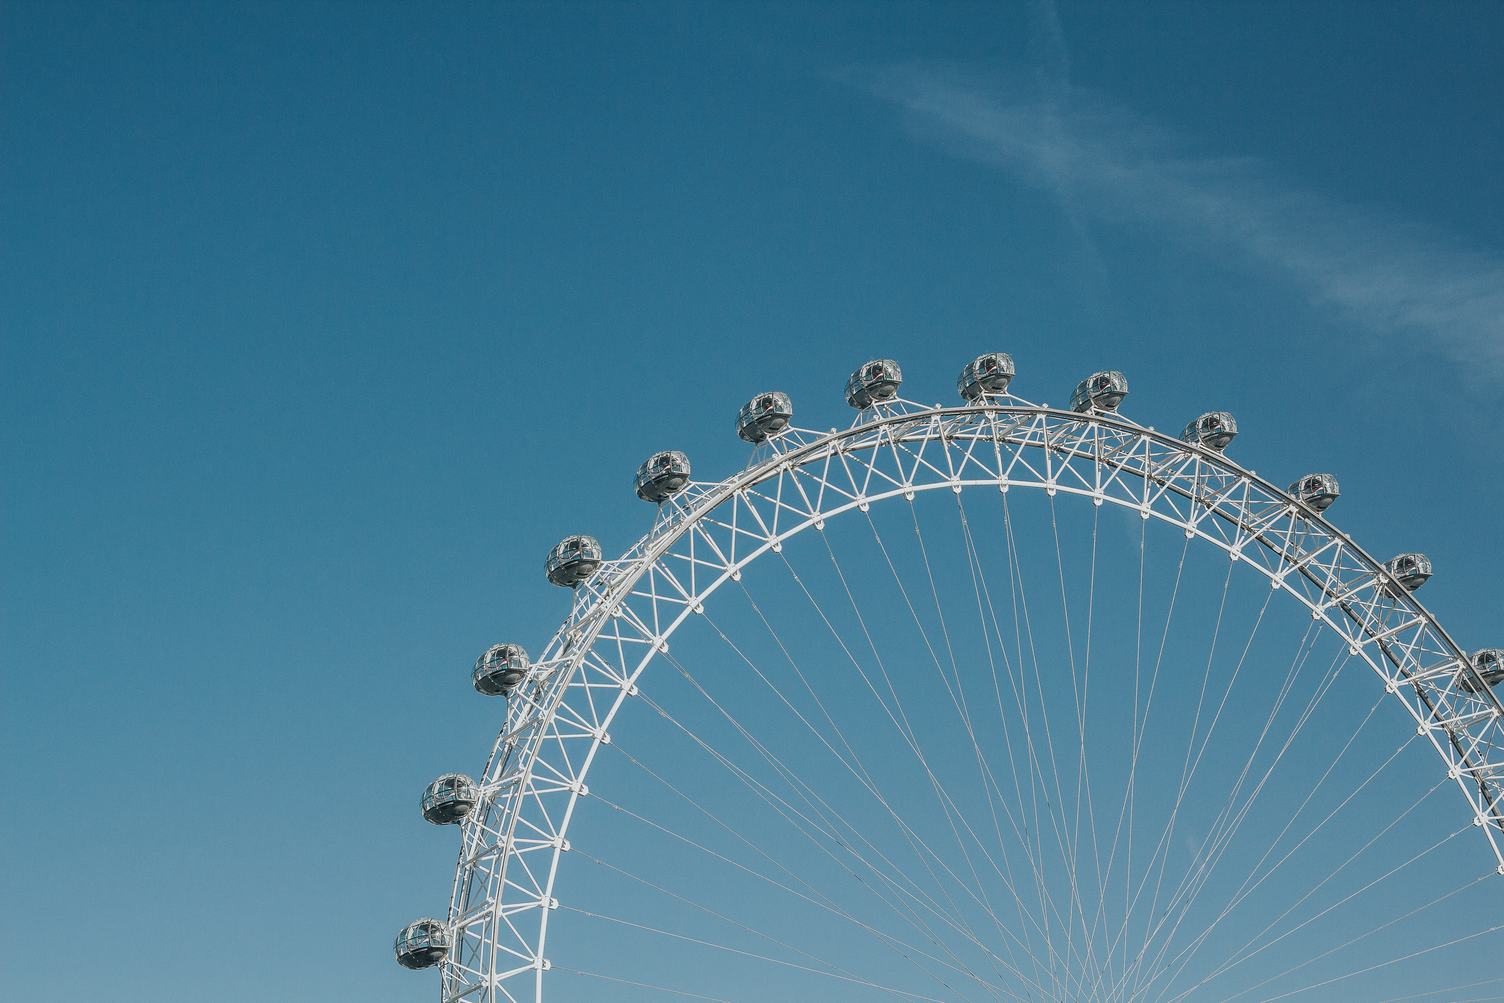 London Eye Ferris Wheel at the Blue Sky